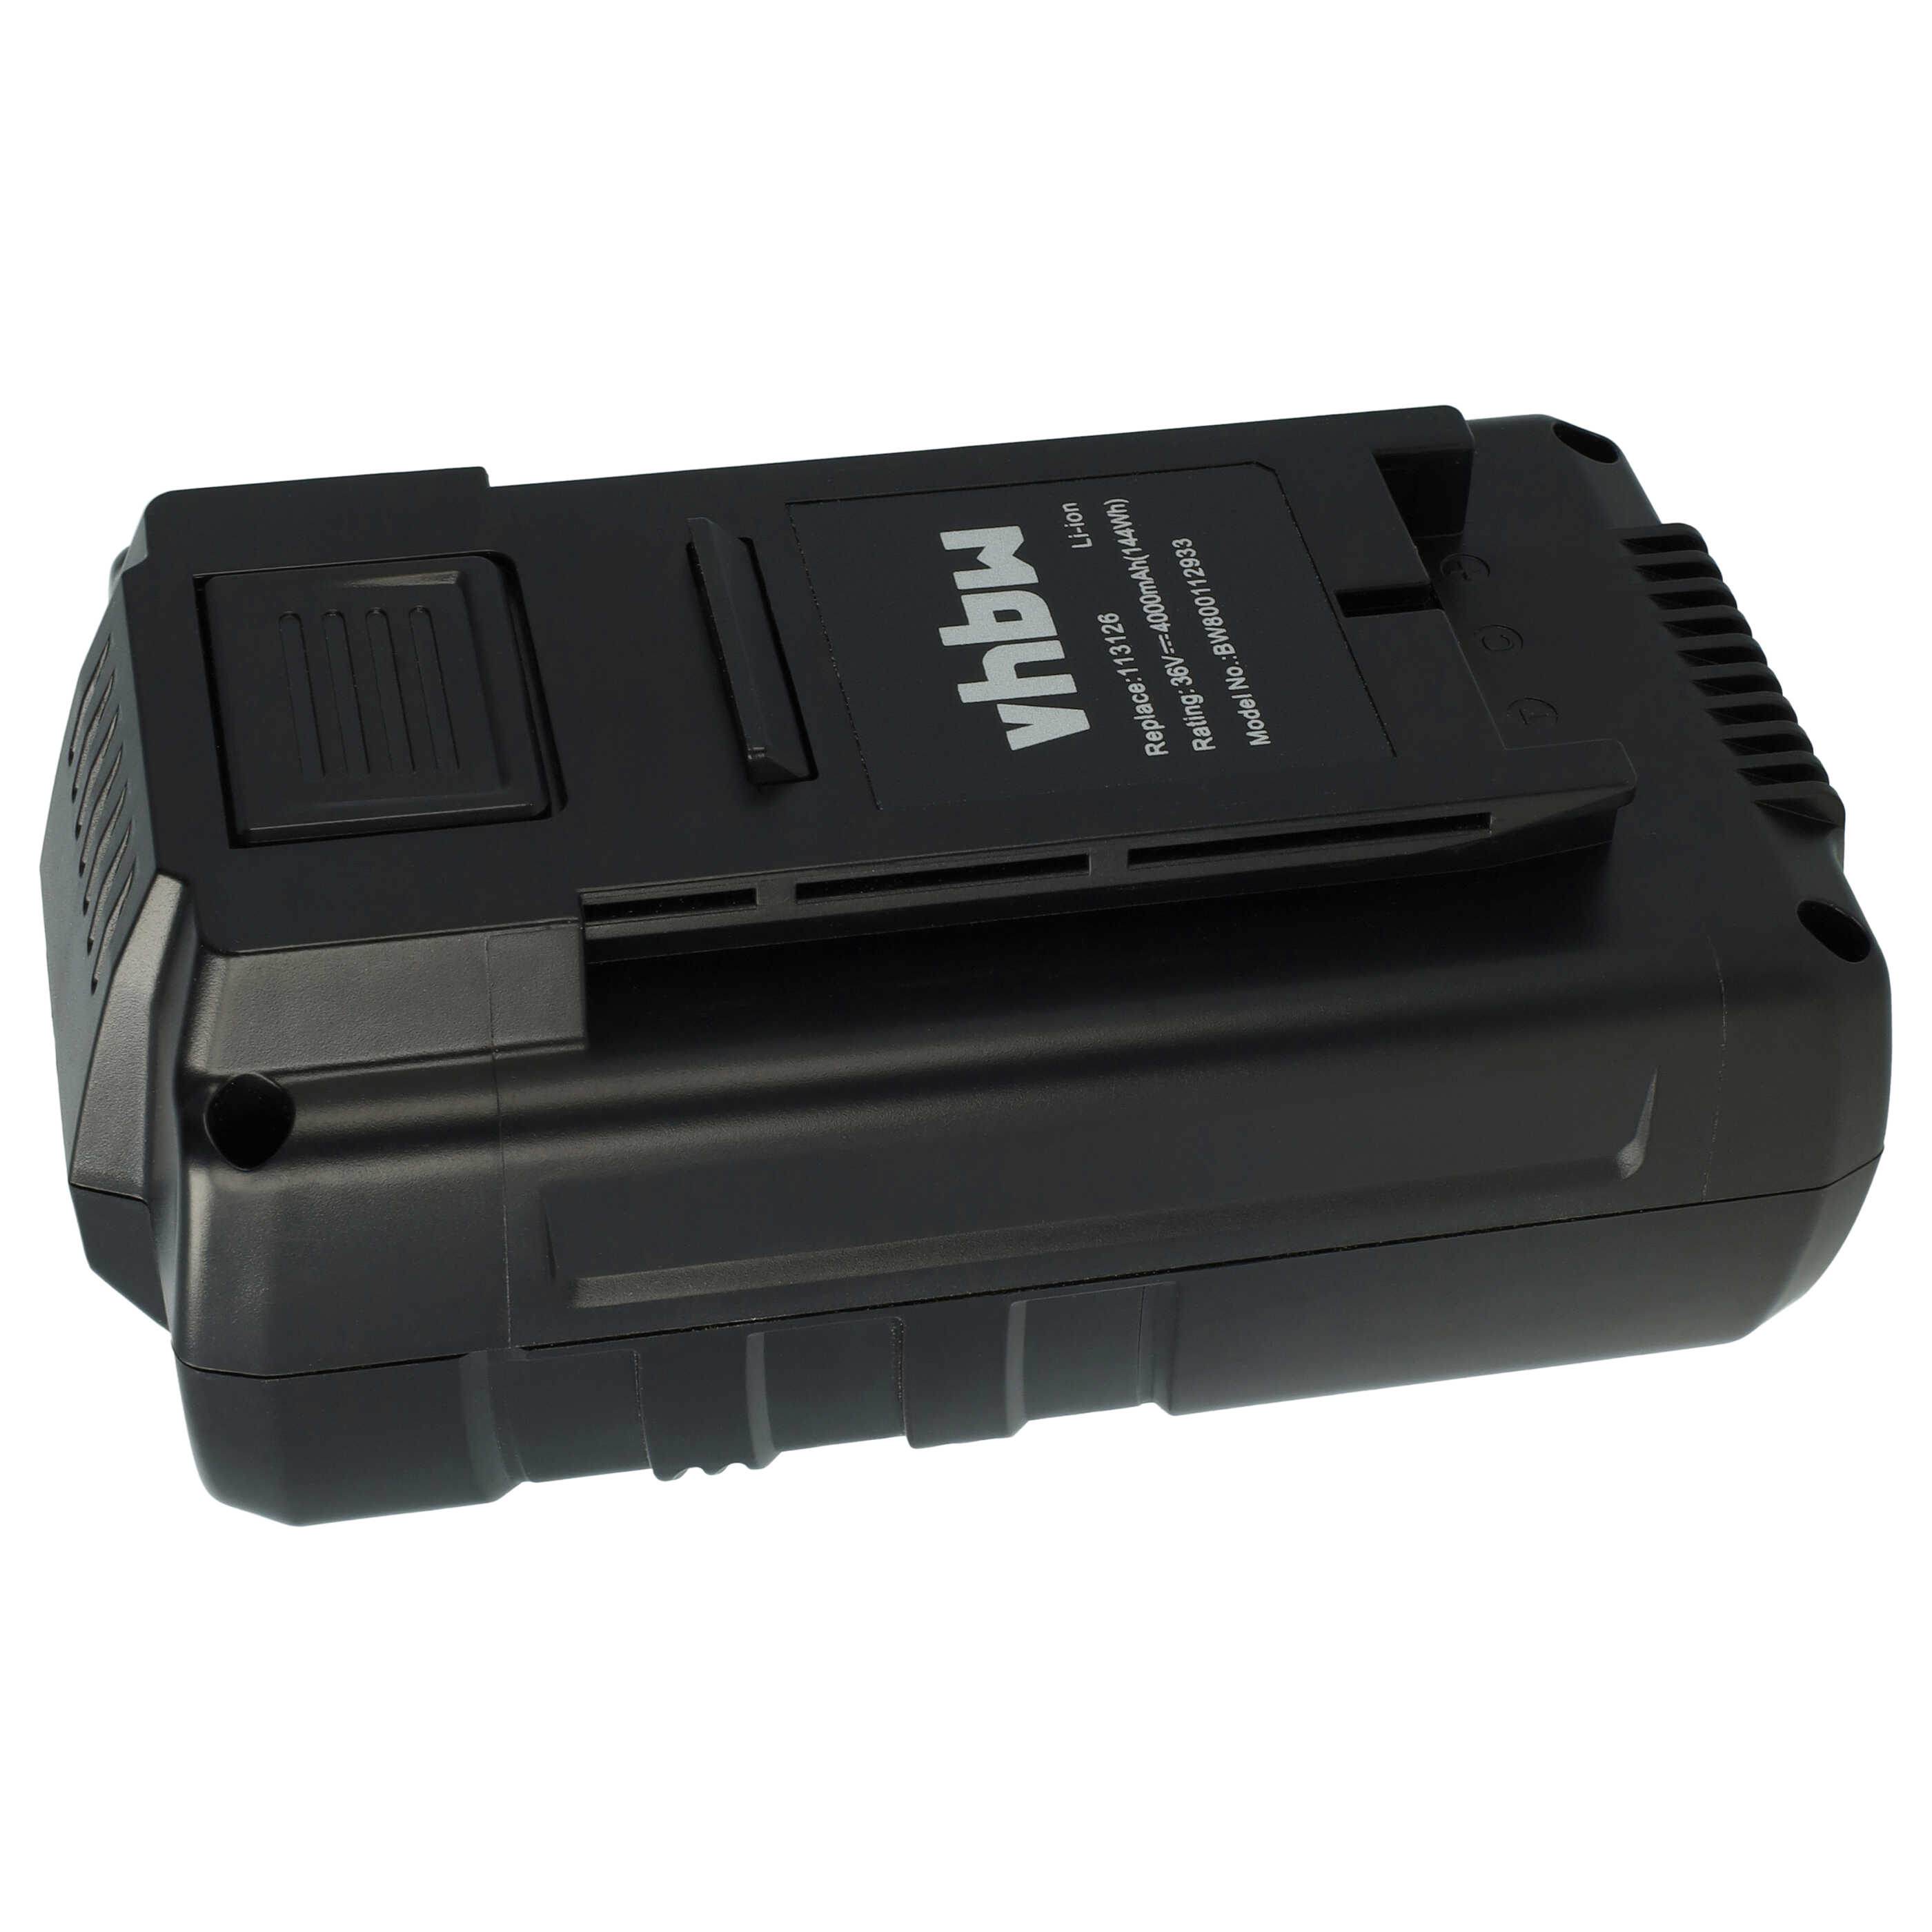 Lawnmower Battery Replacement for AL-KO 113280, 9113280, B150, 113124, 113126 - 4000mAh 36V Li-Ion, black